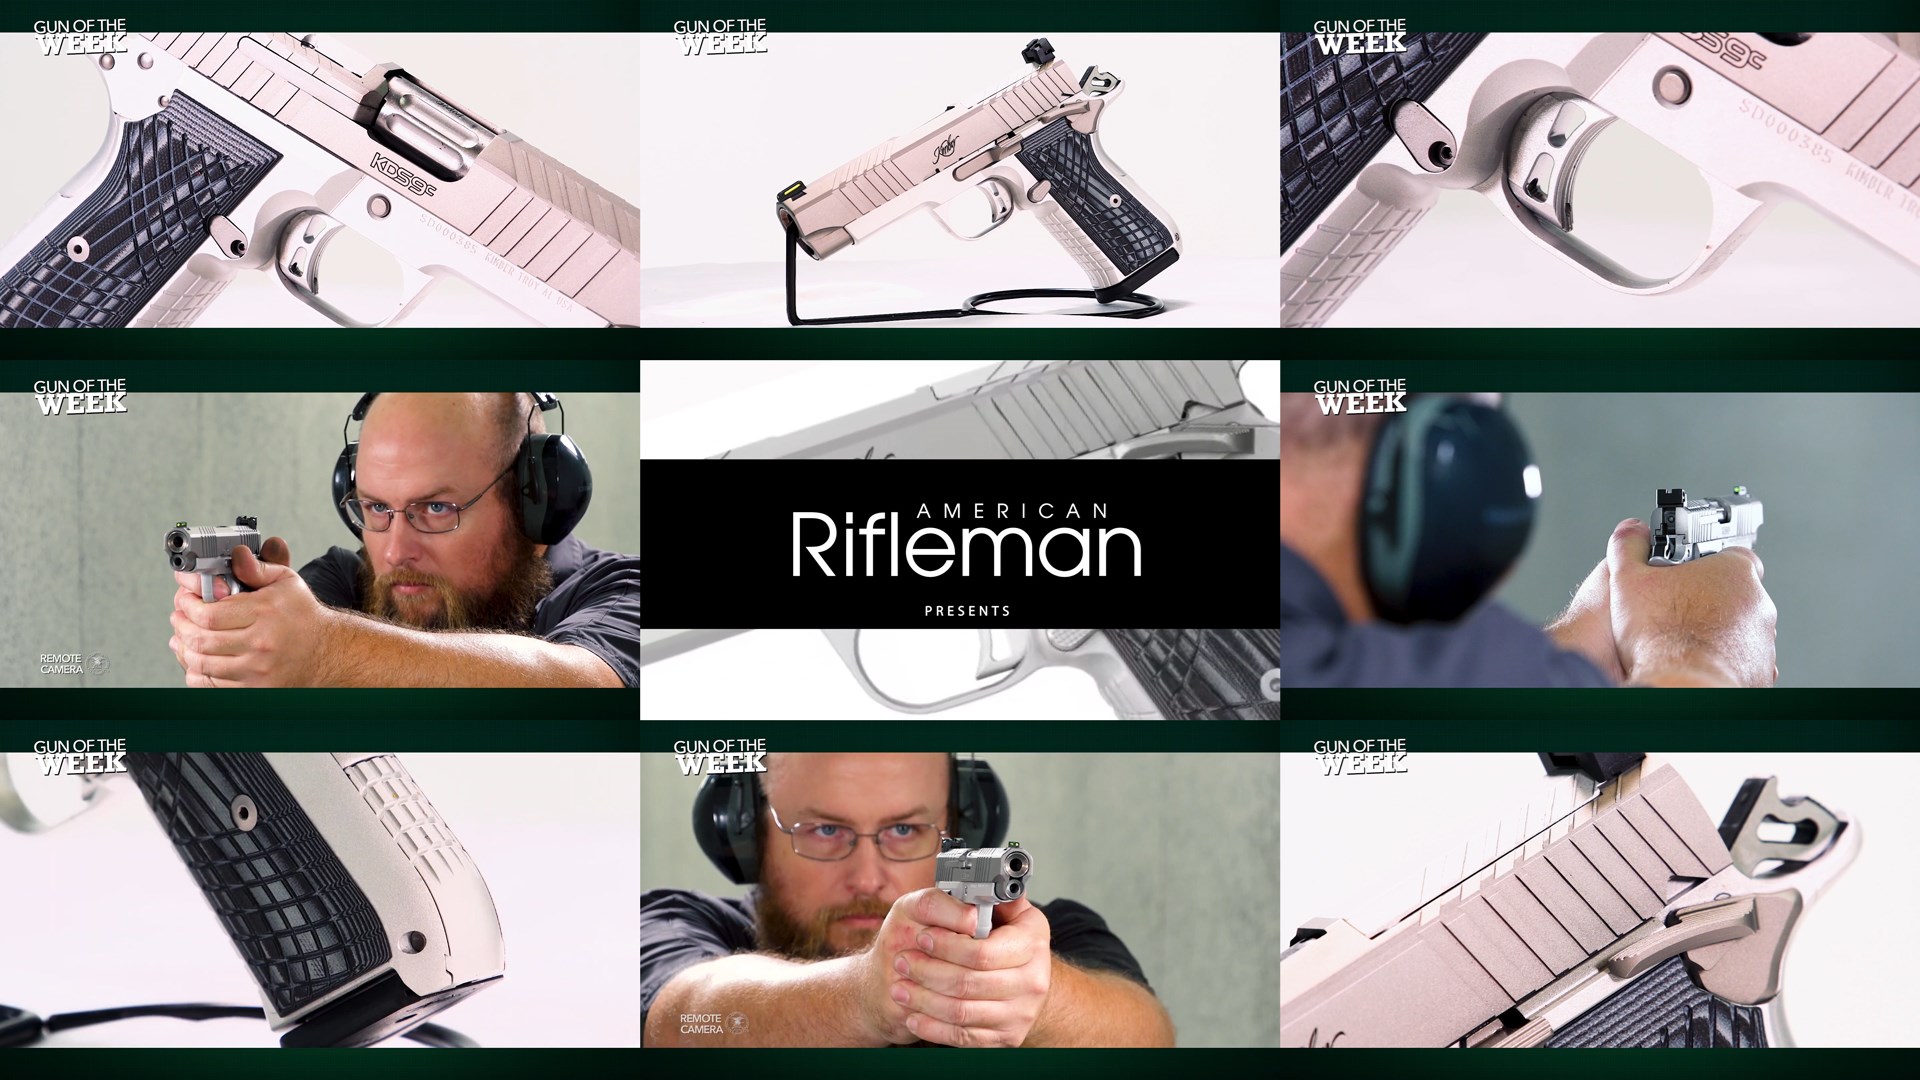 Kimber KDS9c 9 mm pistol details man shooting gun silver finish metal blue stockstiles arrangement 9 images text on image noting AMERICAN RIFLEMAN PRESENTS